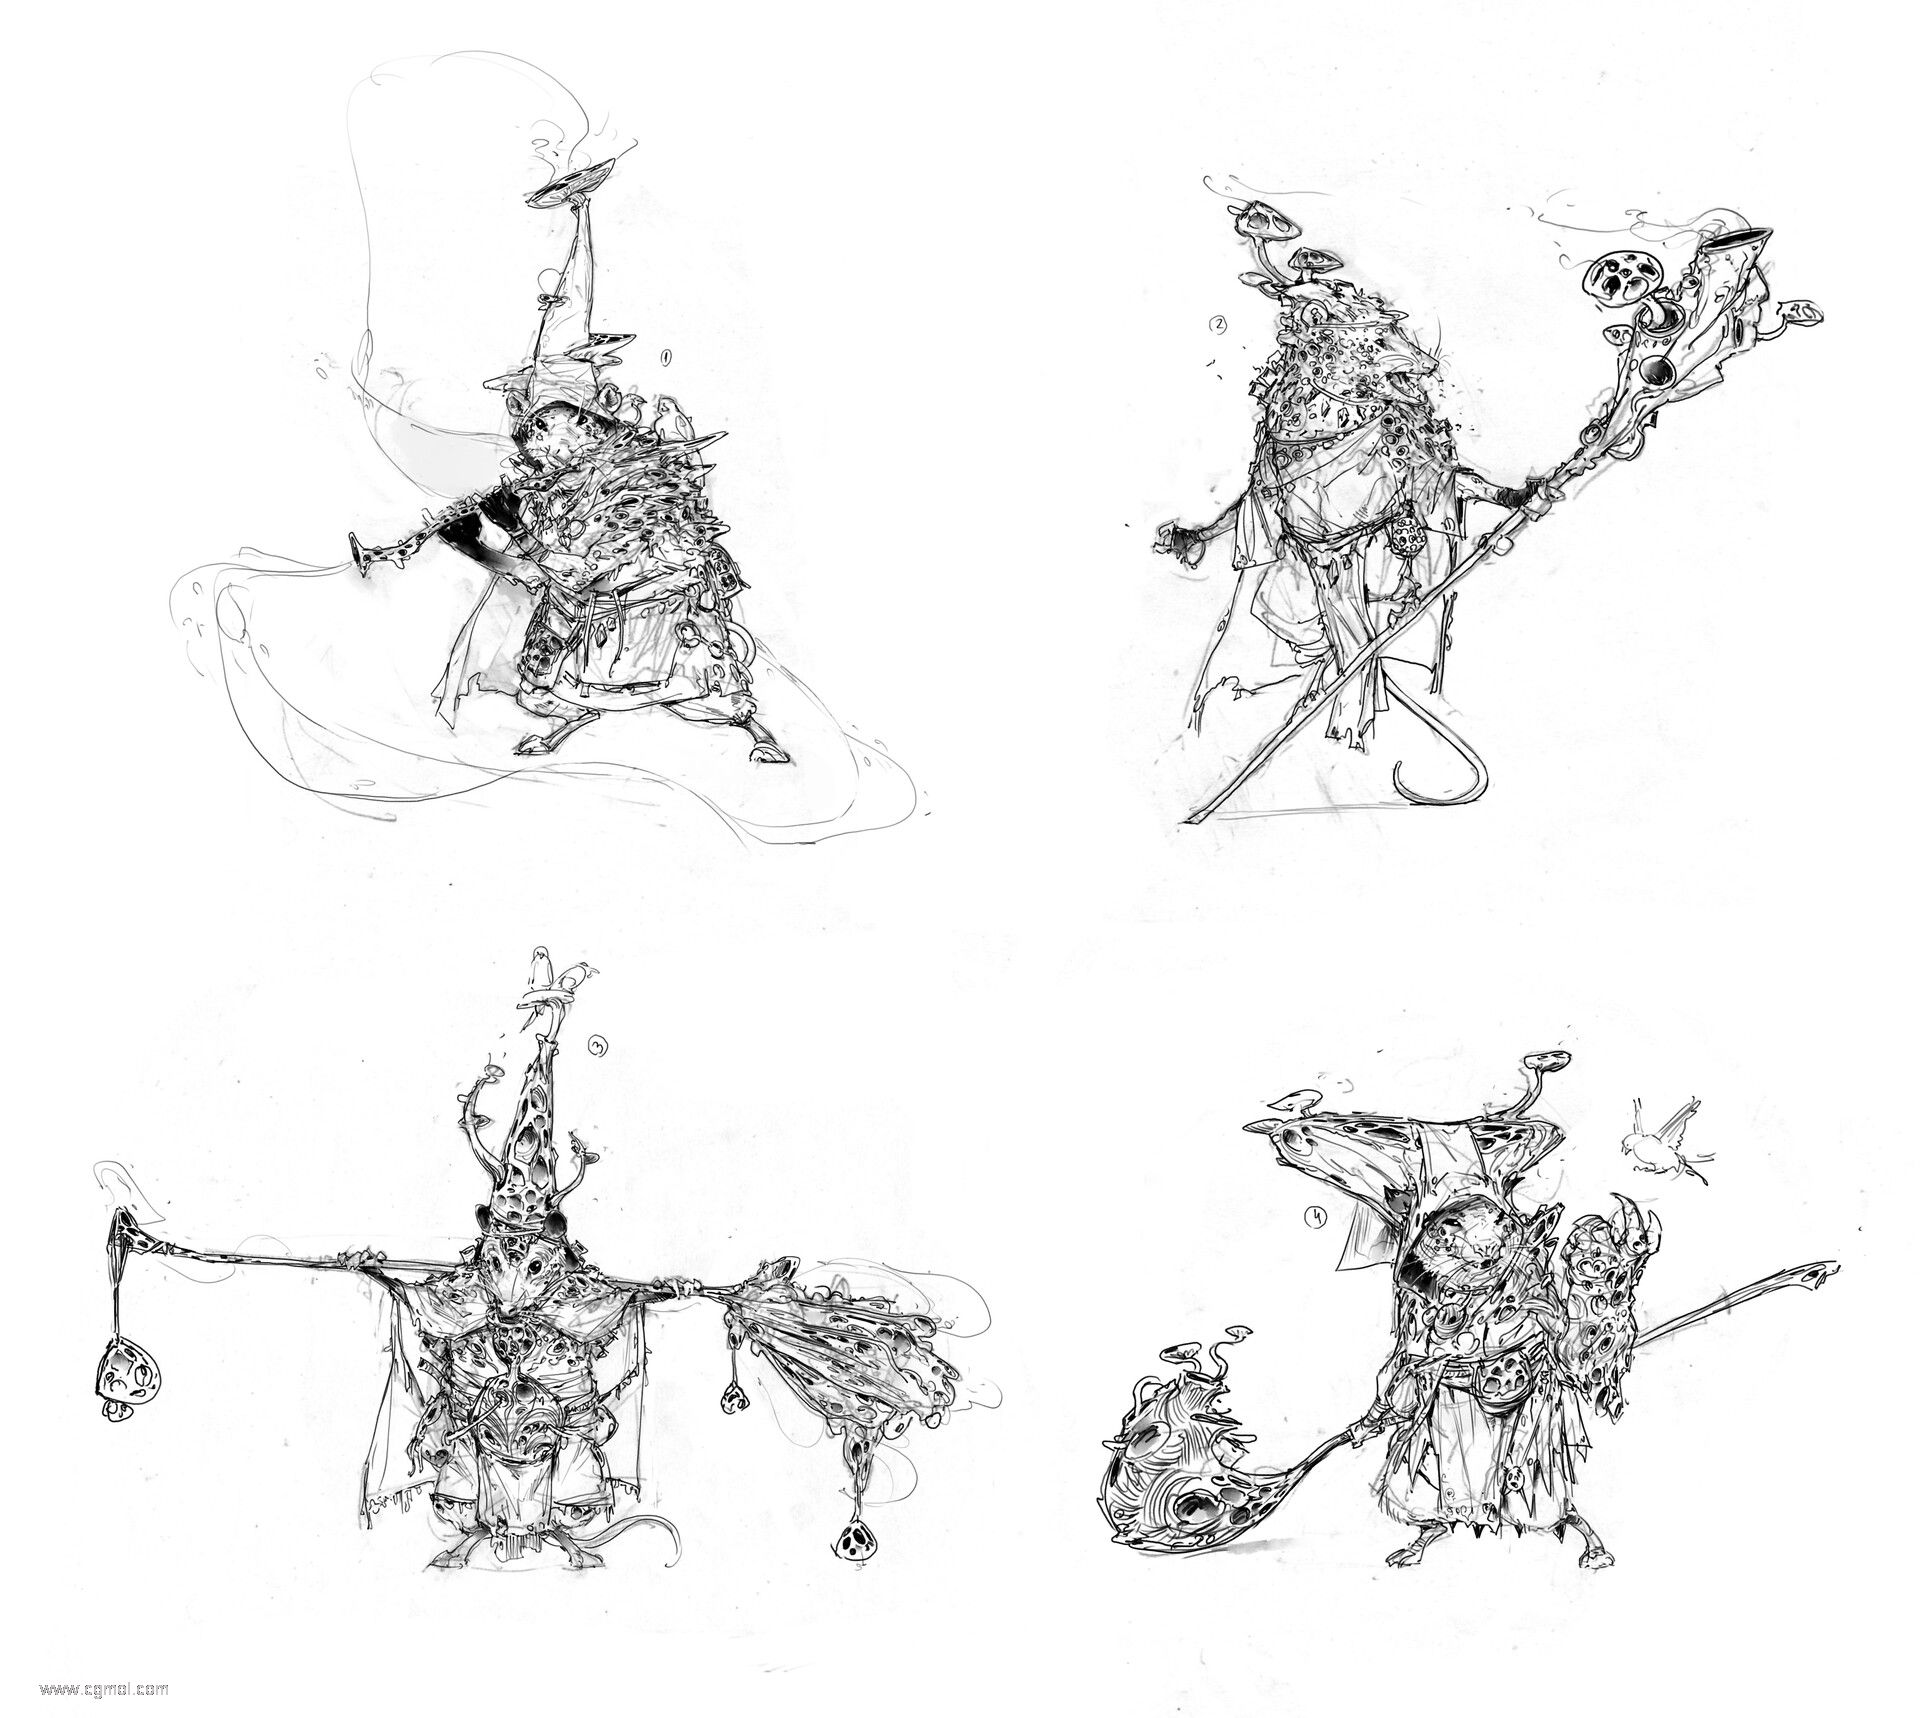 ognjen-sporin-druid-sketches